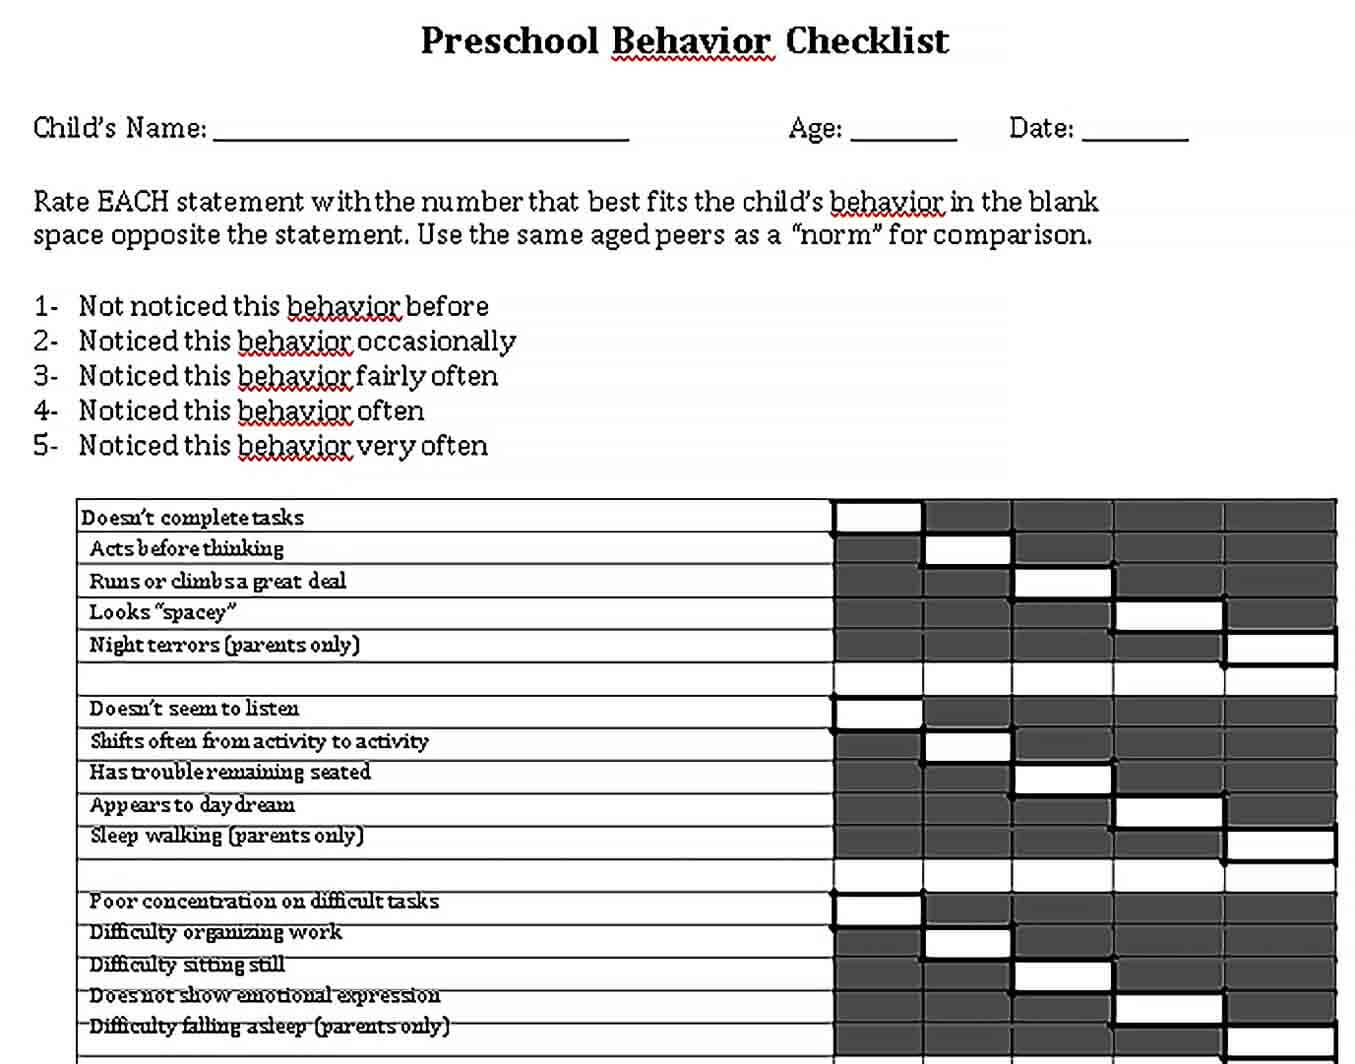 Sample Preschool Behavior Checklist